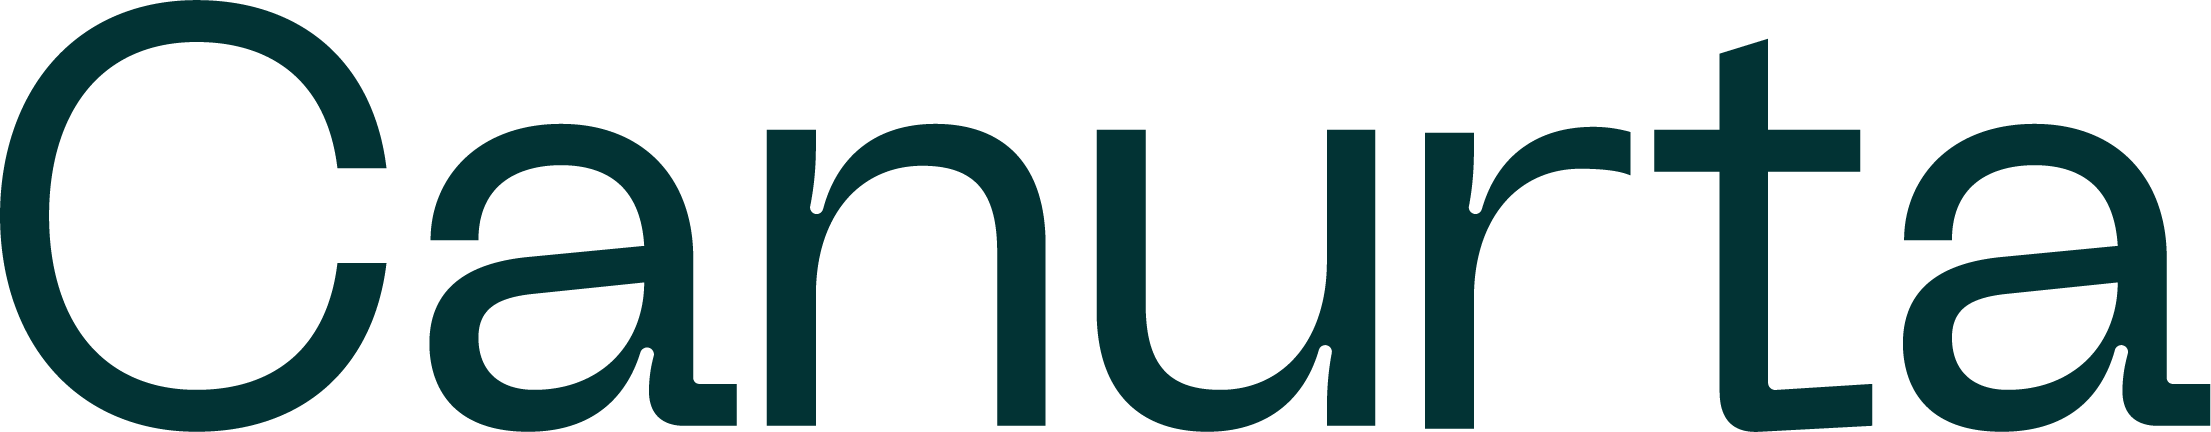 Canurta Logo.png